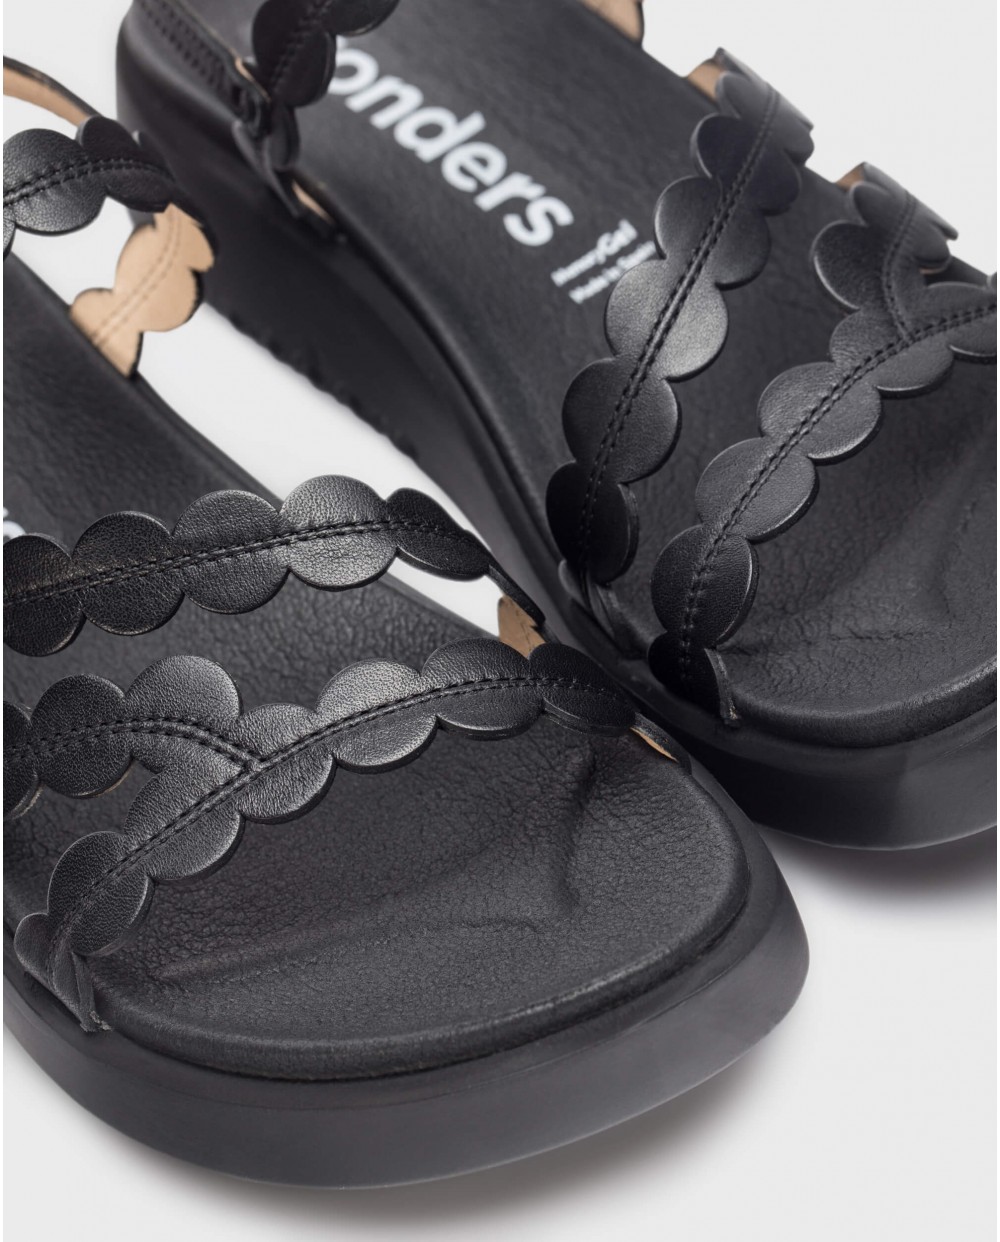 Black Motril sandals